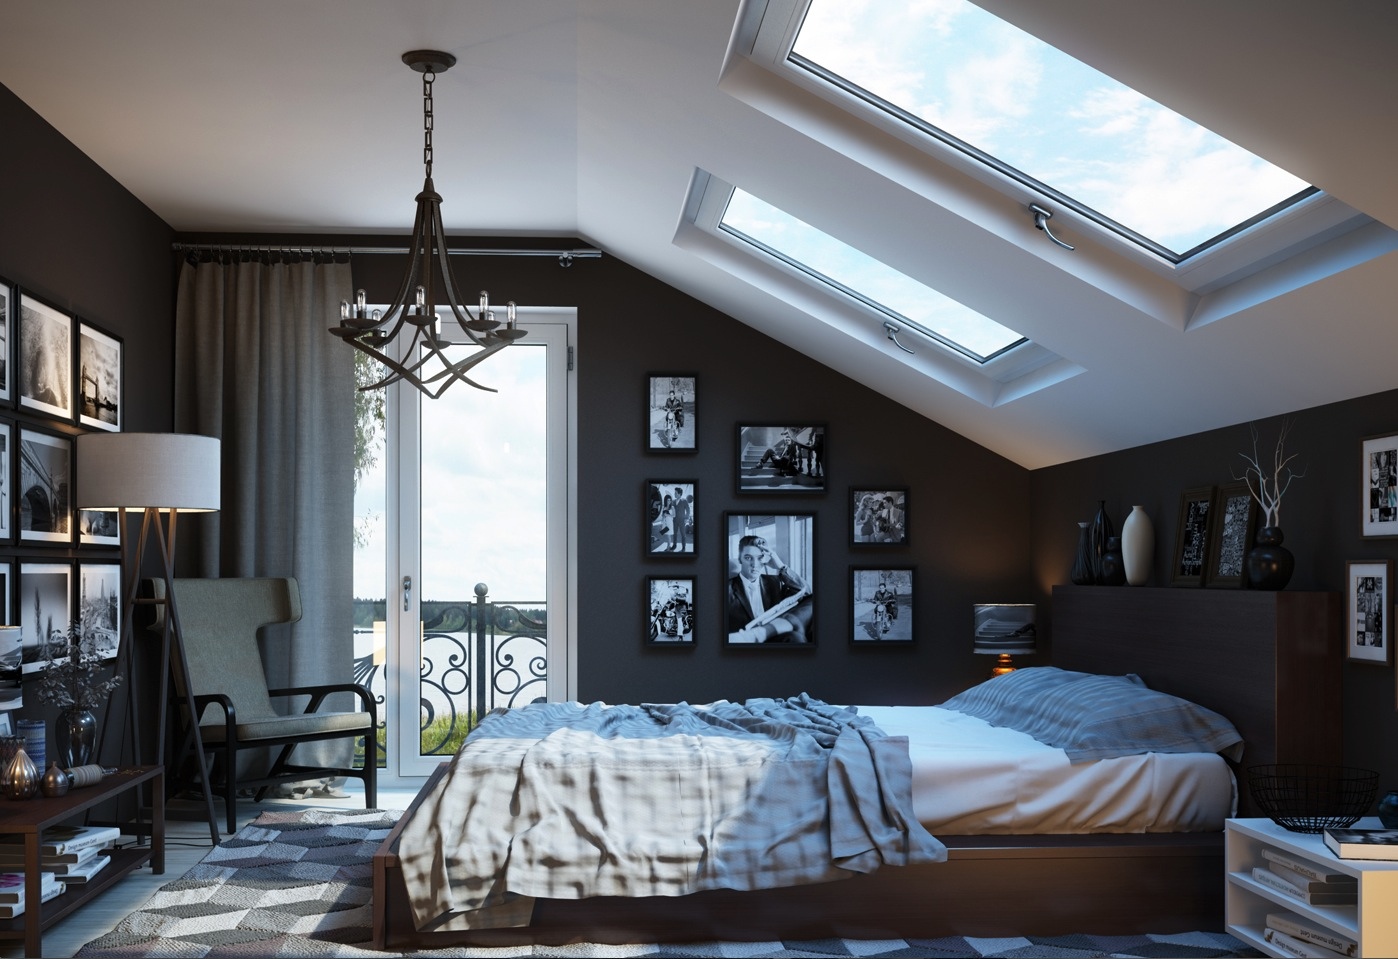 gray bedroom design "width =" 1398 "height =" 959 "srcset =" https://mileray.com/wp-content/uploads/2020/05/1588508931_555_Modern-Bedroom-Designs-Combined-With-Minimalist-Decor-Ideas-Looks-So.jpeg 1398w, https://mileray.com/ wp-content / uploads / 2016/10 / Yury-Rybak-300x206.jpeg 300w, https://mileray.com/wp-content/uploads/2016/10/Yury-Rybak-768x527.jpeg 768w, https: // mileray.com/wp-content/uploads/2016/10/Yury-Rybak-1024x702.jpeg 1024w, https://mileray.com/wp-content/uploads/2016/10/Yury-Rybak-100x70.jpeg 100w, https://mileray.com/wp-content/uploads/2016/10/Yury-Rybak-218x150.jpeg 218w, https://mileray.com/wp-content/uploads/2016/10/Yury-Rybak-696x477 .jpeg 696w, https://mileray.com/wp-content/uploads/2016/10/Yury-Rybak-1068x733.jpeg 1068w, https://mileray.com/wp-content/uploads/2016/10/Yury -Rybak-612x420.jpeg 612w "sizes =" (maximum width: 1398px) 100vw, 1398px